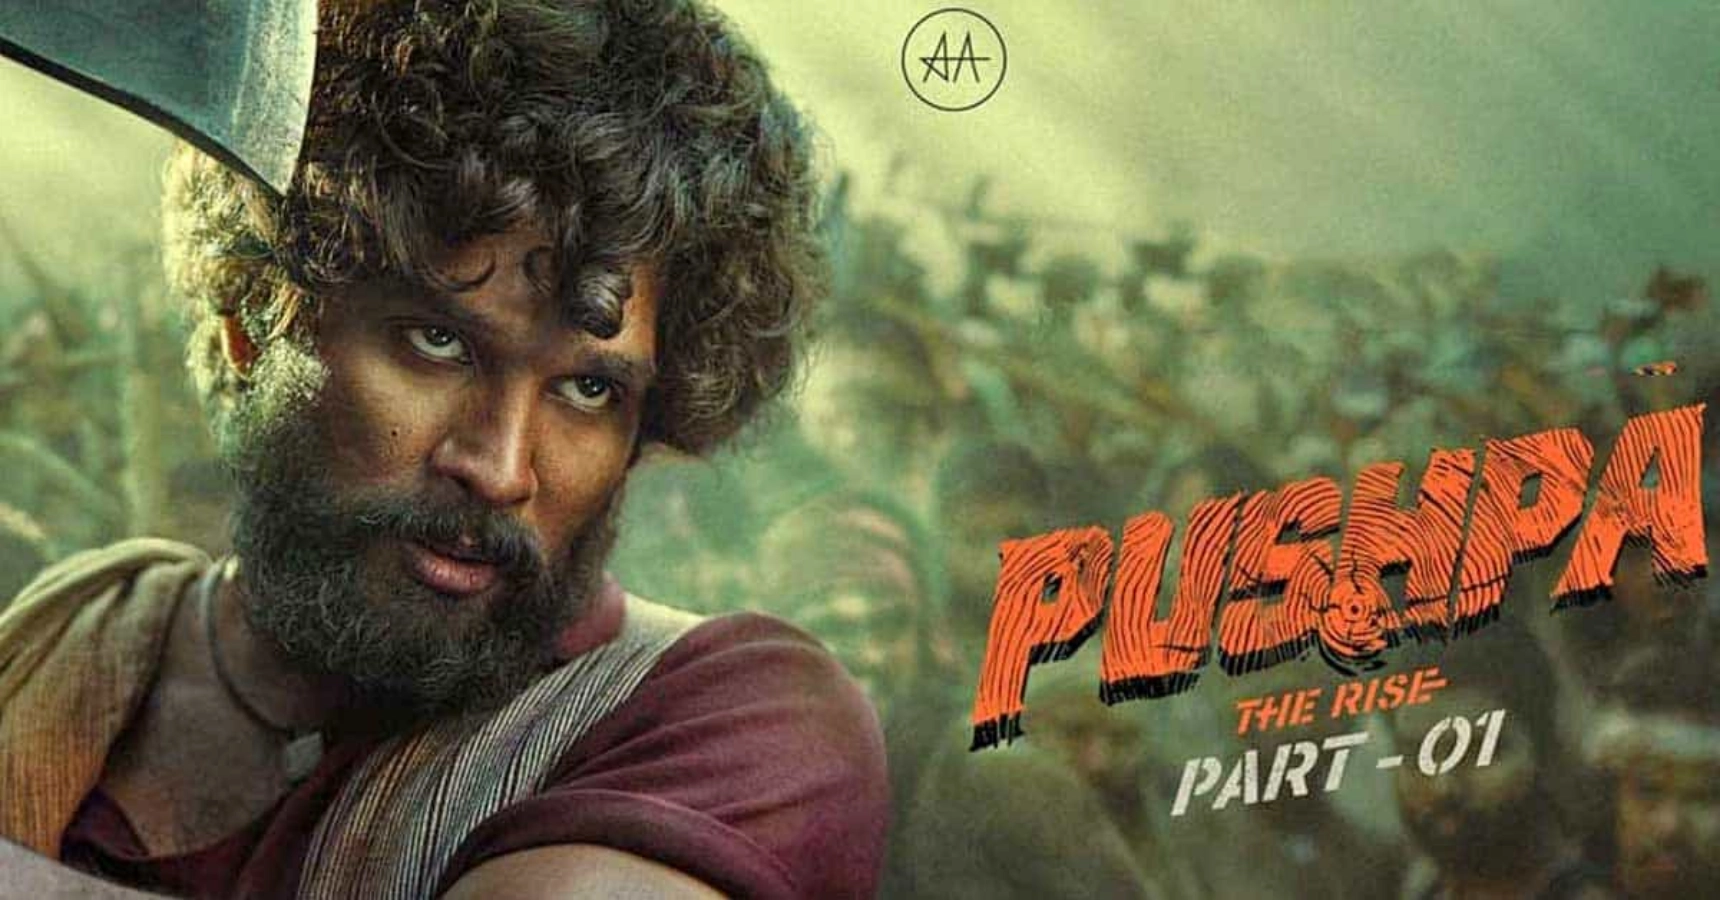 Pushpa the rise 